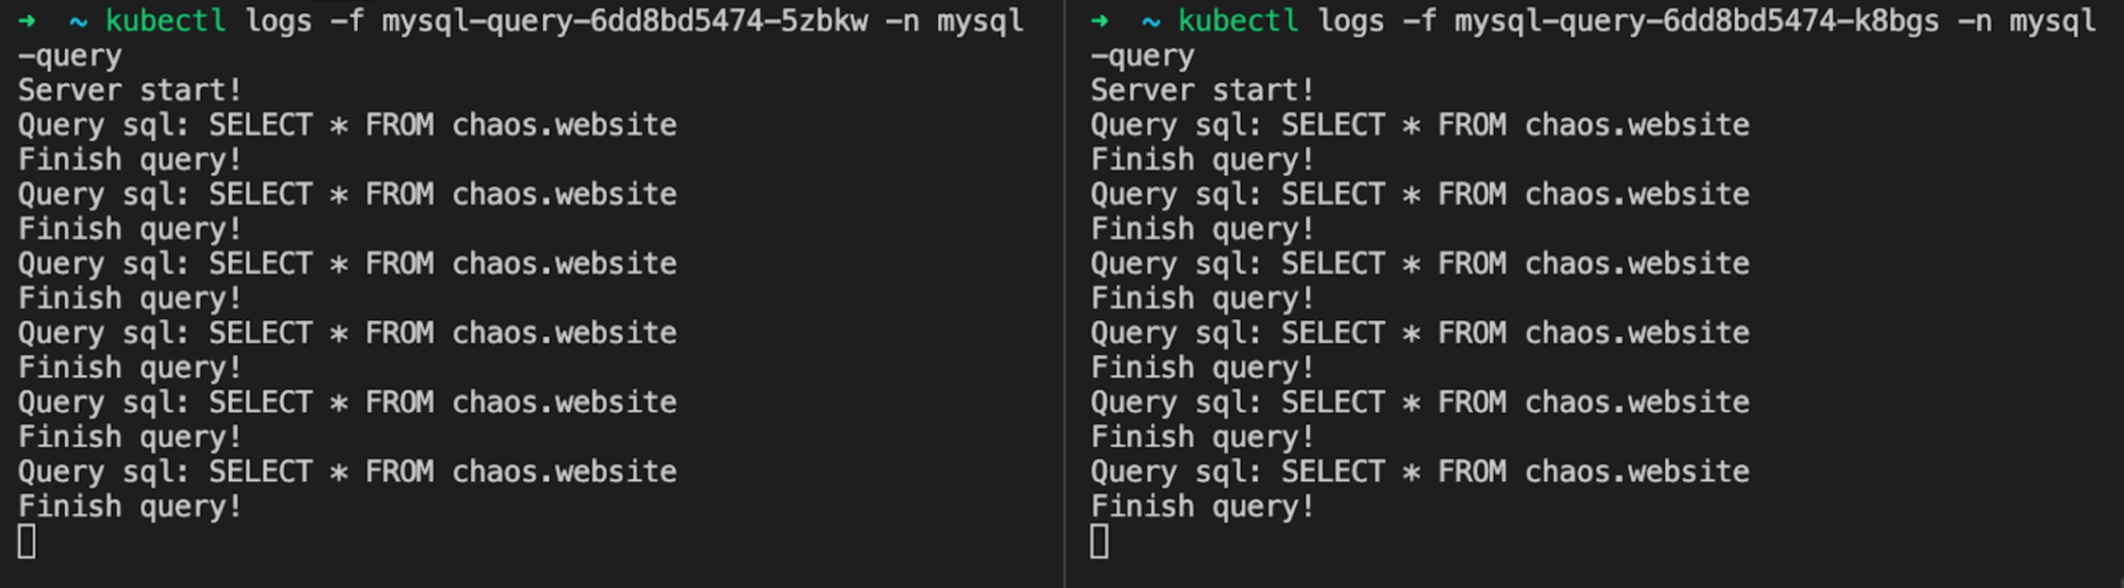 Two mysql-query Pods